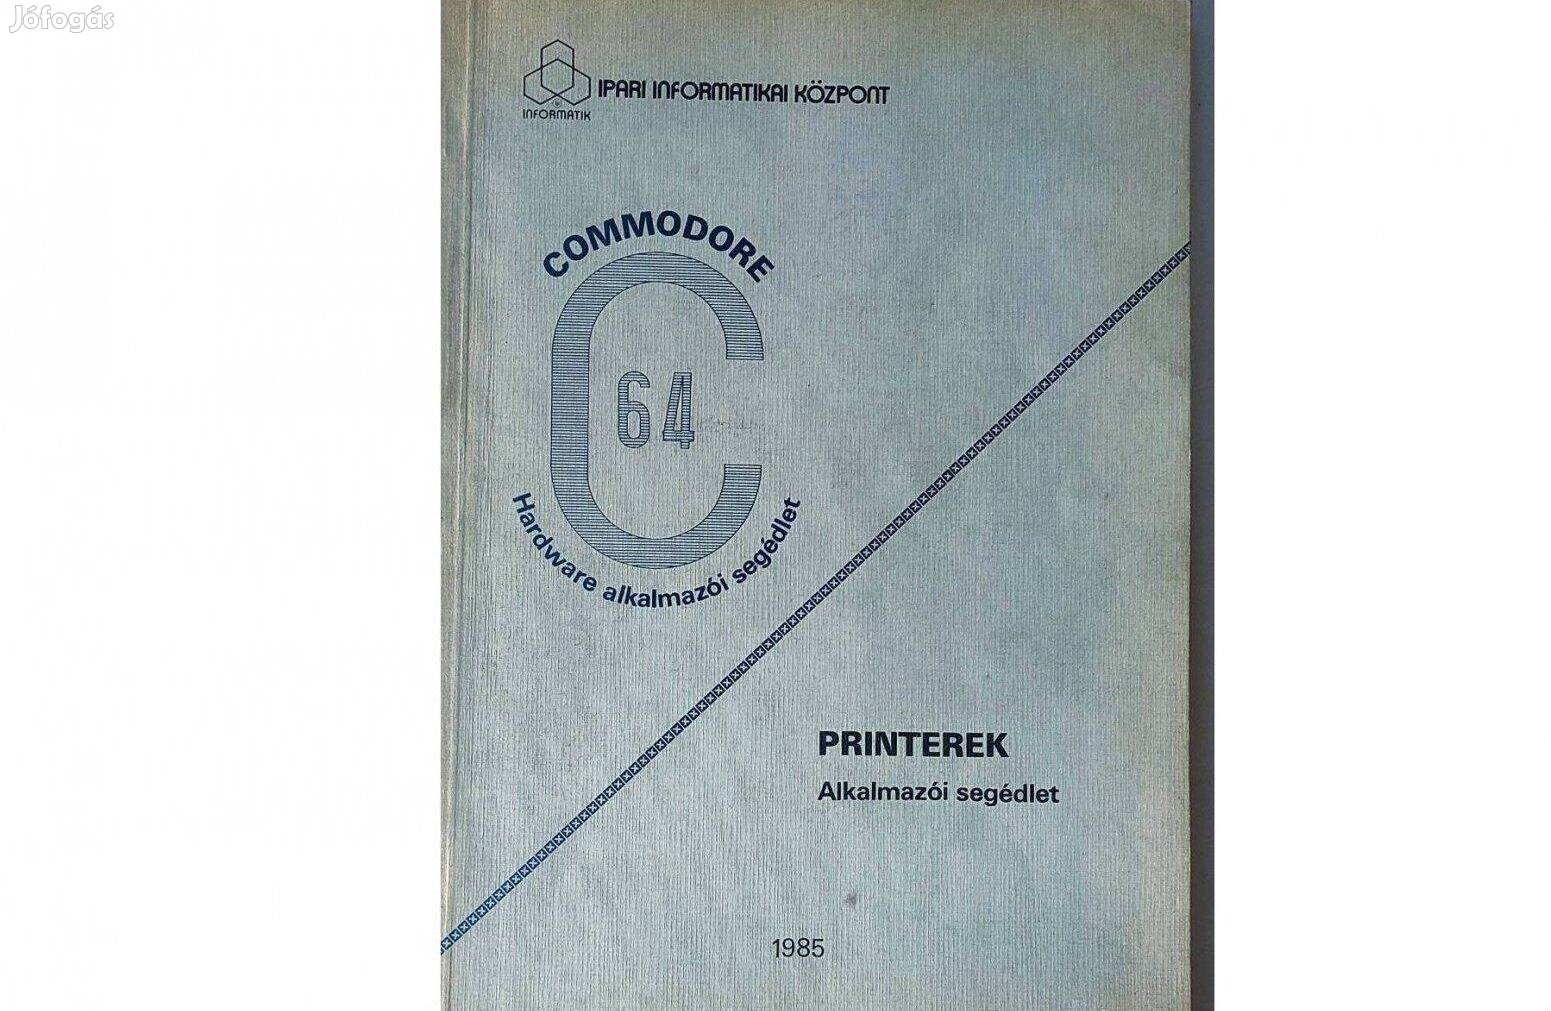 Commodore C64 Printerek Alkalmazói segédlet 1985, Dr.Makra Ernőné,